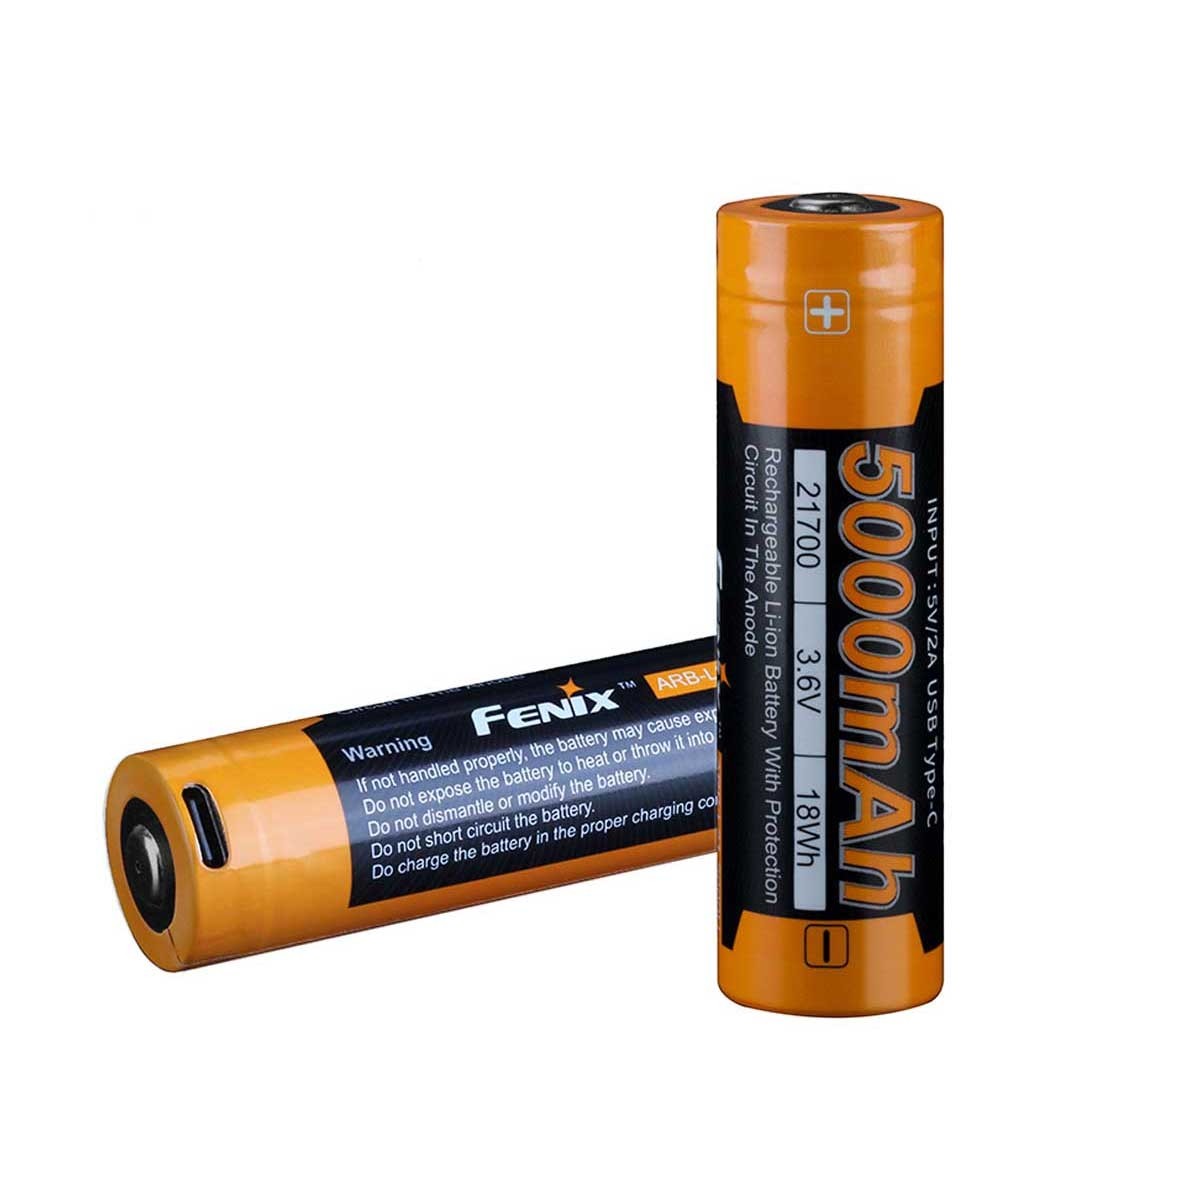 Fenix 21700 USB-C Rechargeable Li-ion Battery (ARB-L21-5000U)